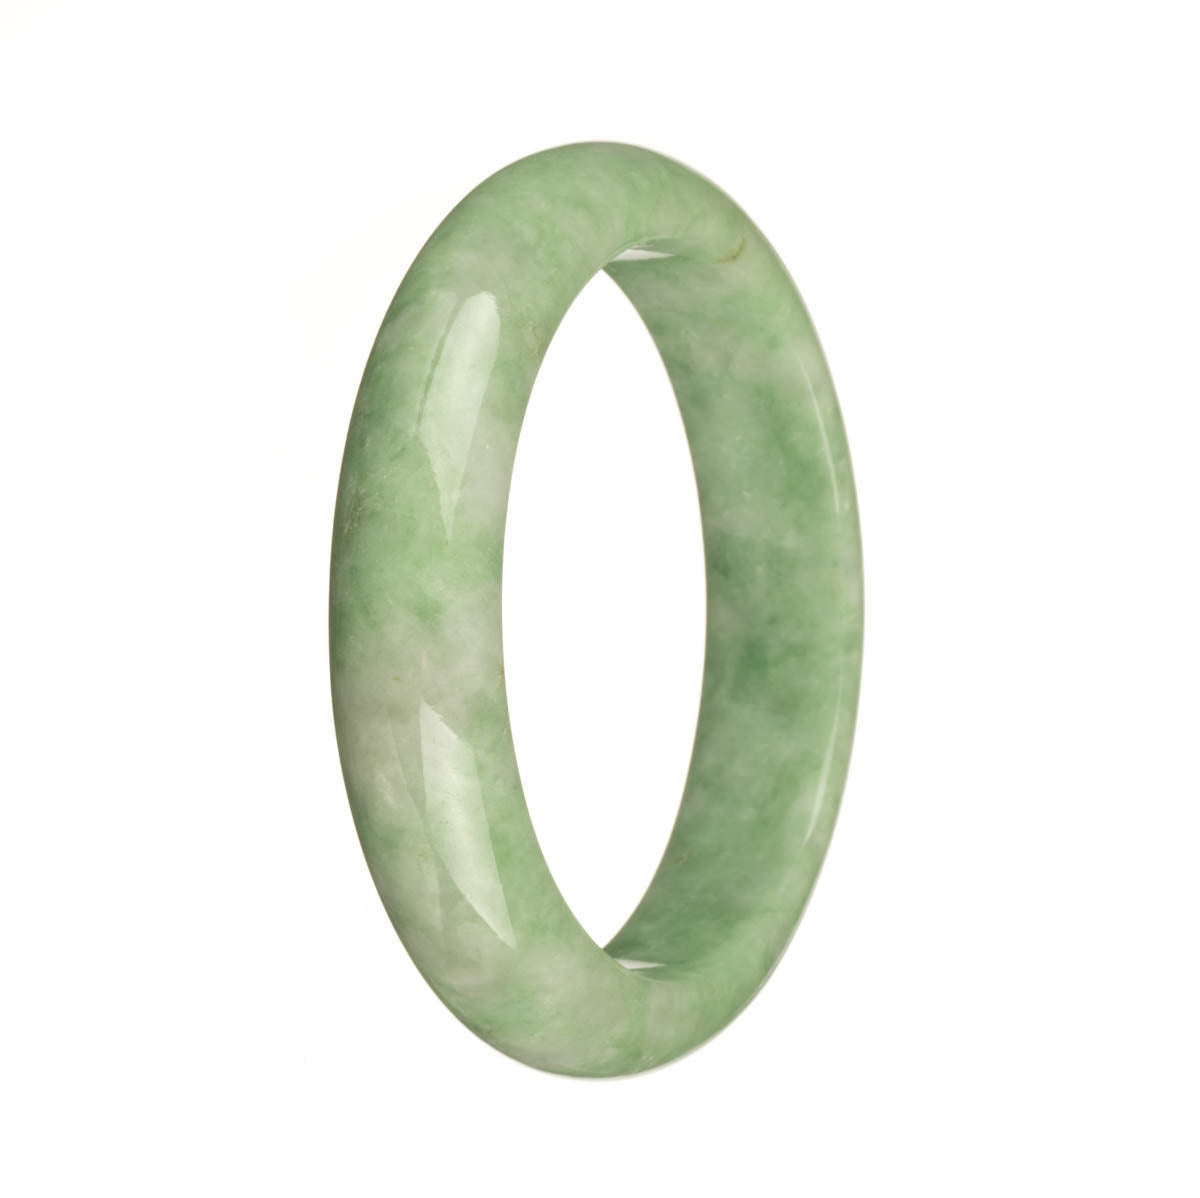 Real Natural Apple Green Jade Bracelet - 58mm Half Moon